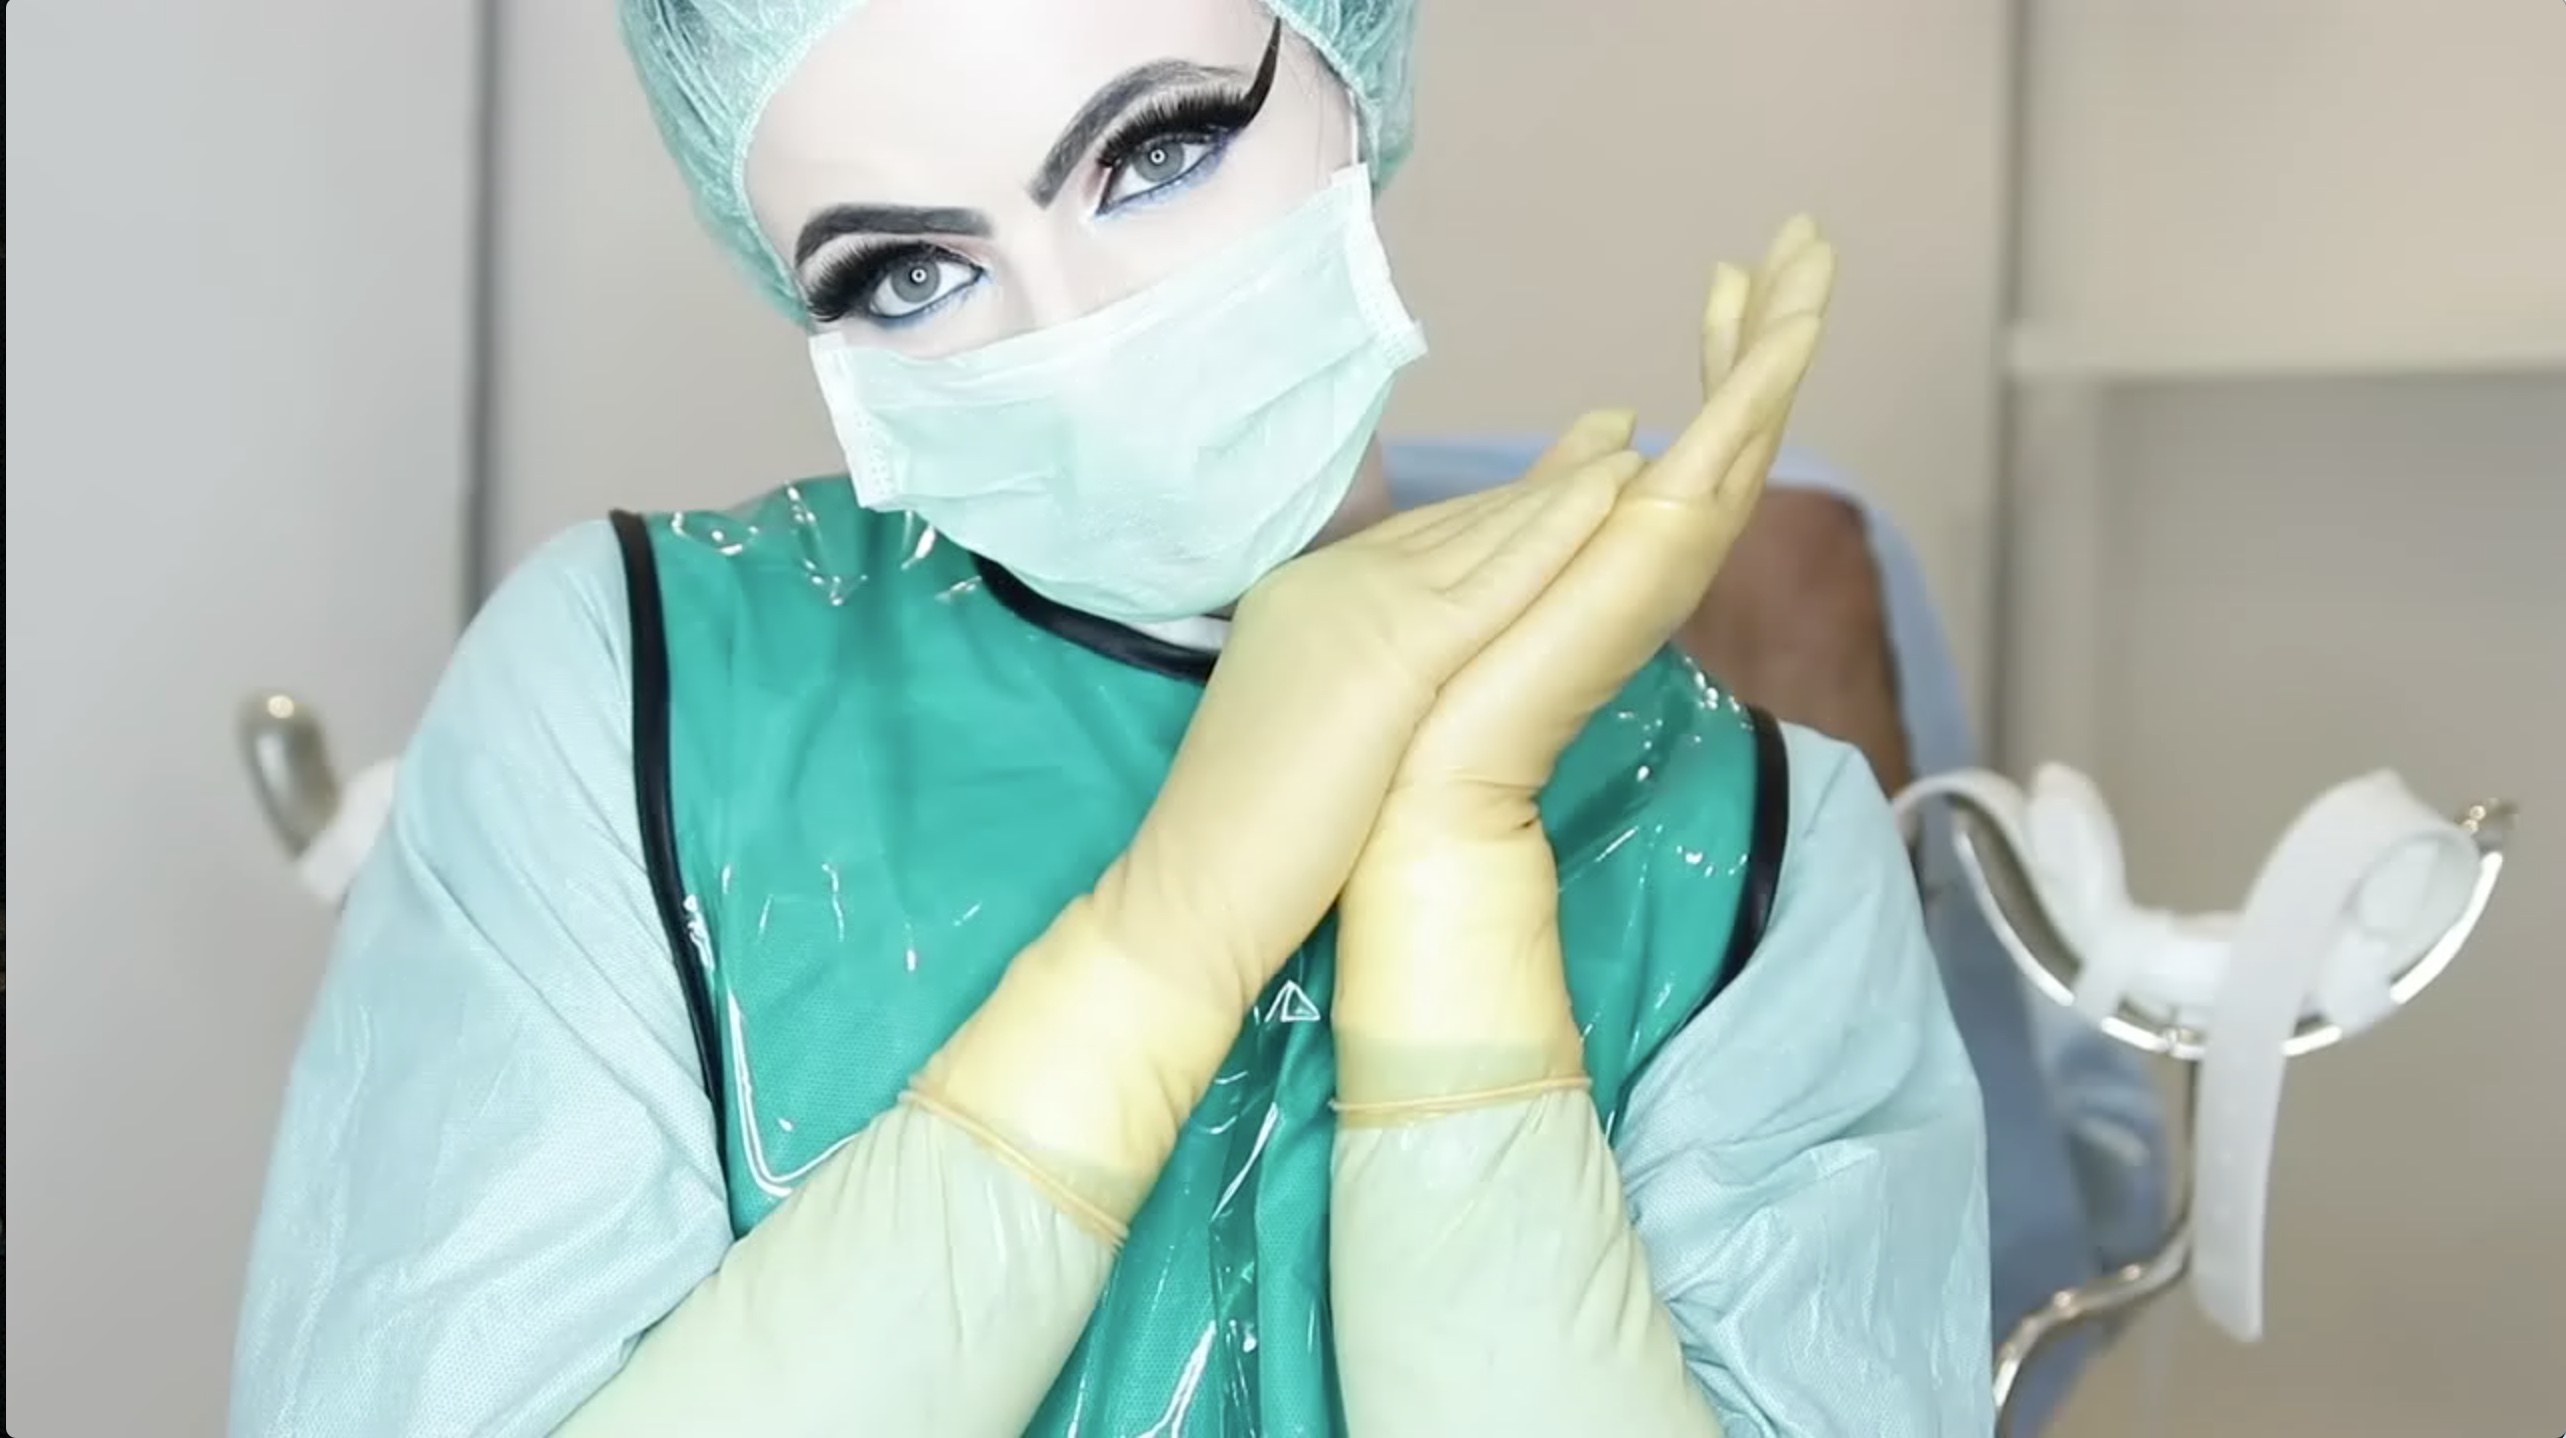 Surgical glove fetish